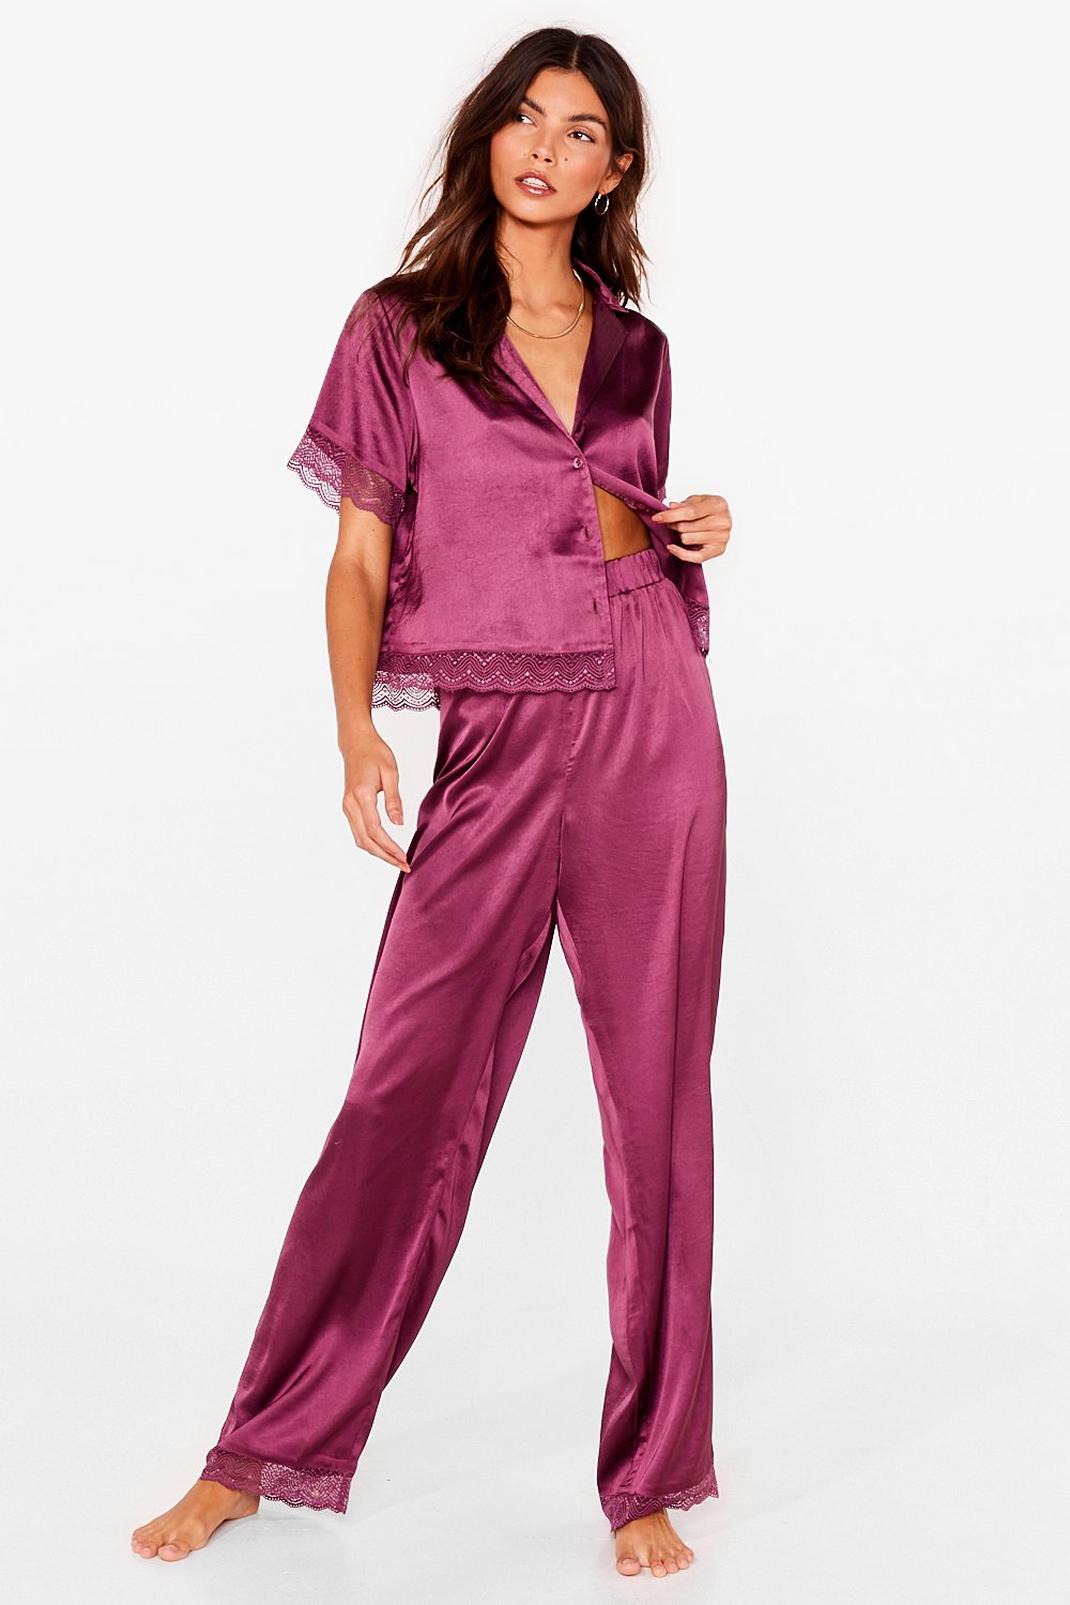 Plum Satin Lace Pants Pajama Set image number 1